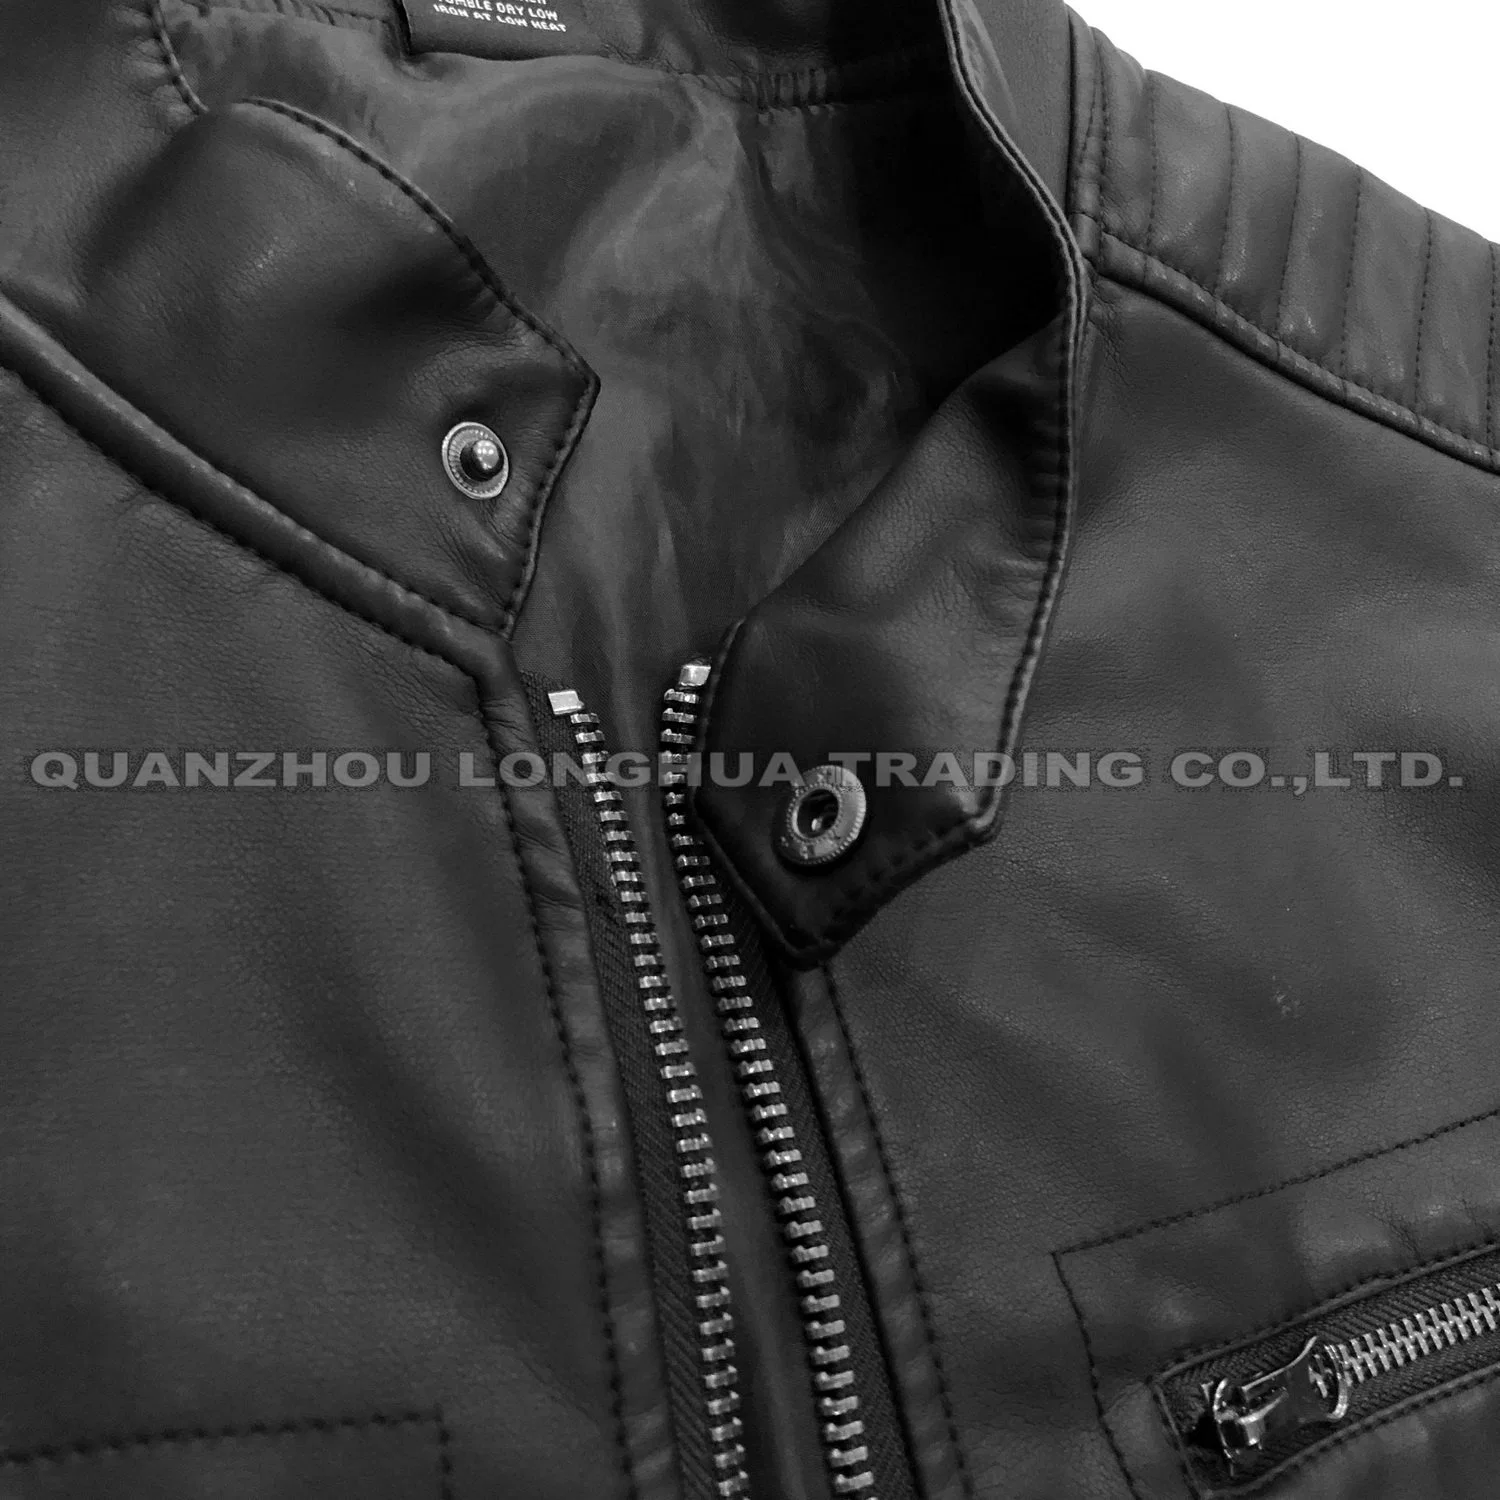 Мужская куртка Boy Jacket Новая стированная кожаная одежда Black PU Одежда одежда одежда одежда одежда Внешний халат